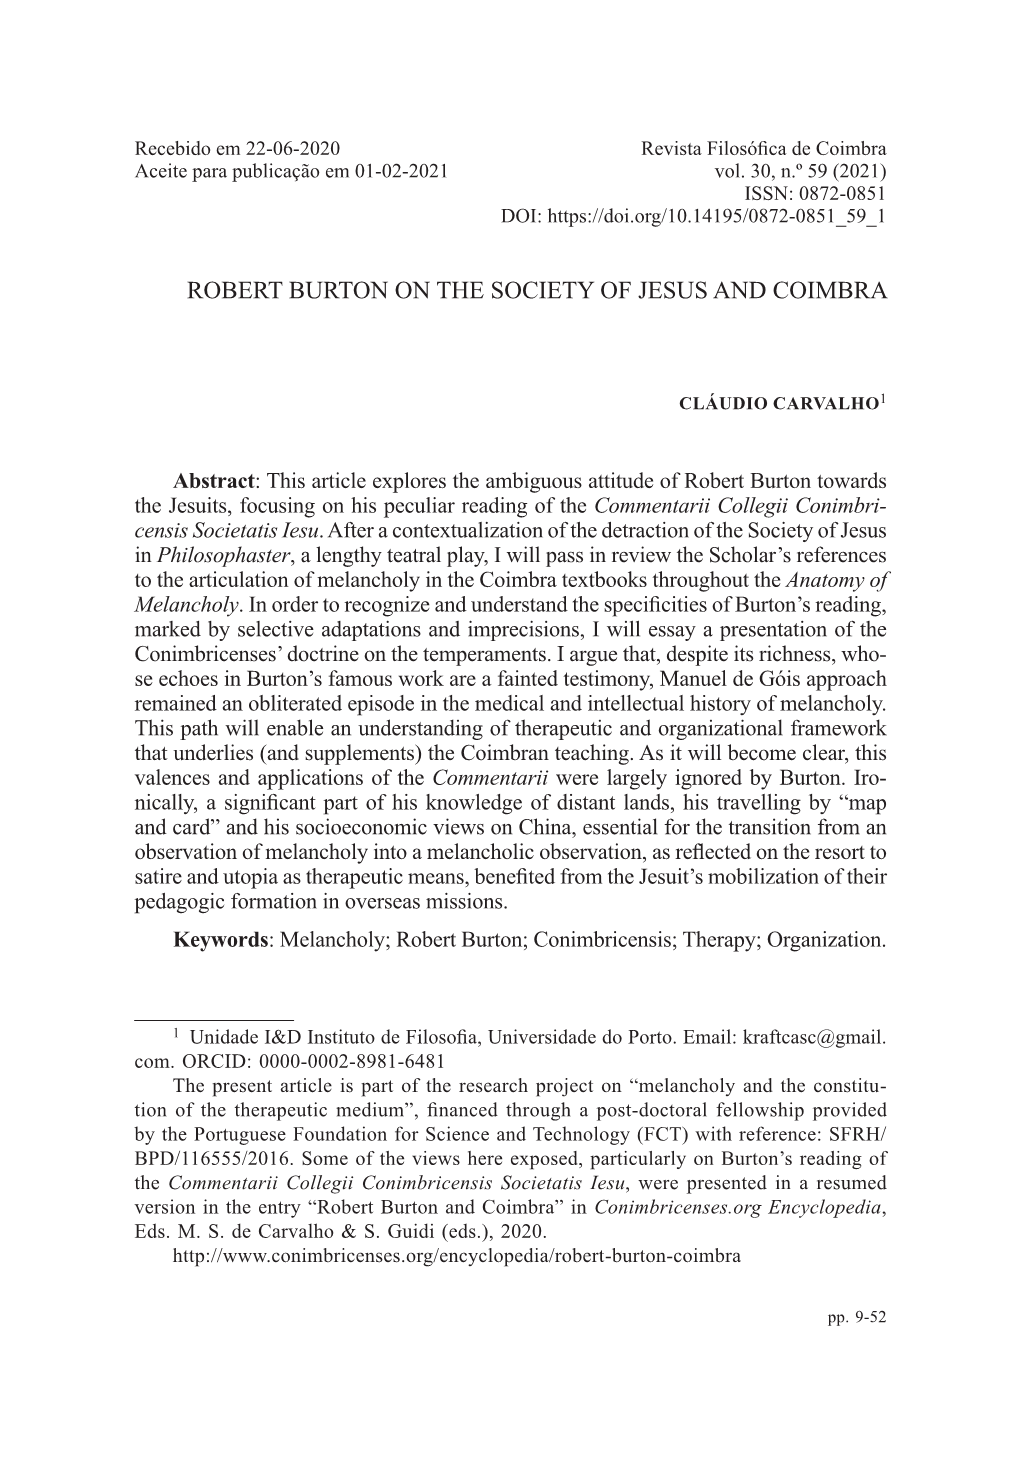 Robert Burton on the Society of Jesus and Coimbra